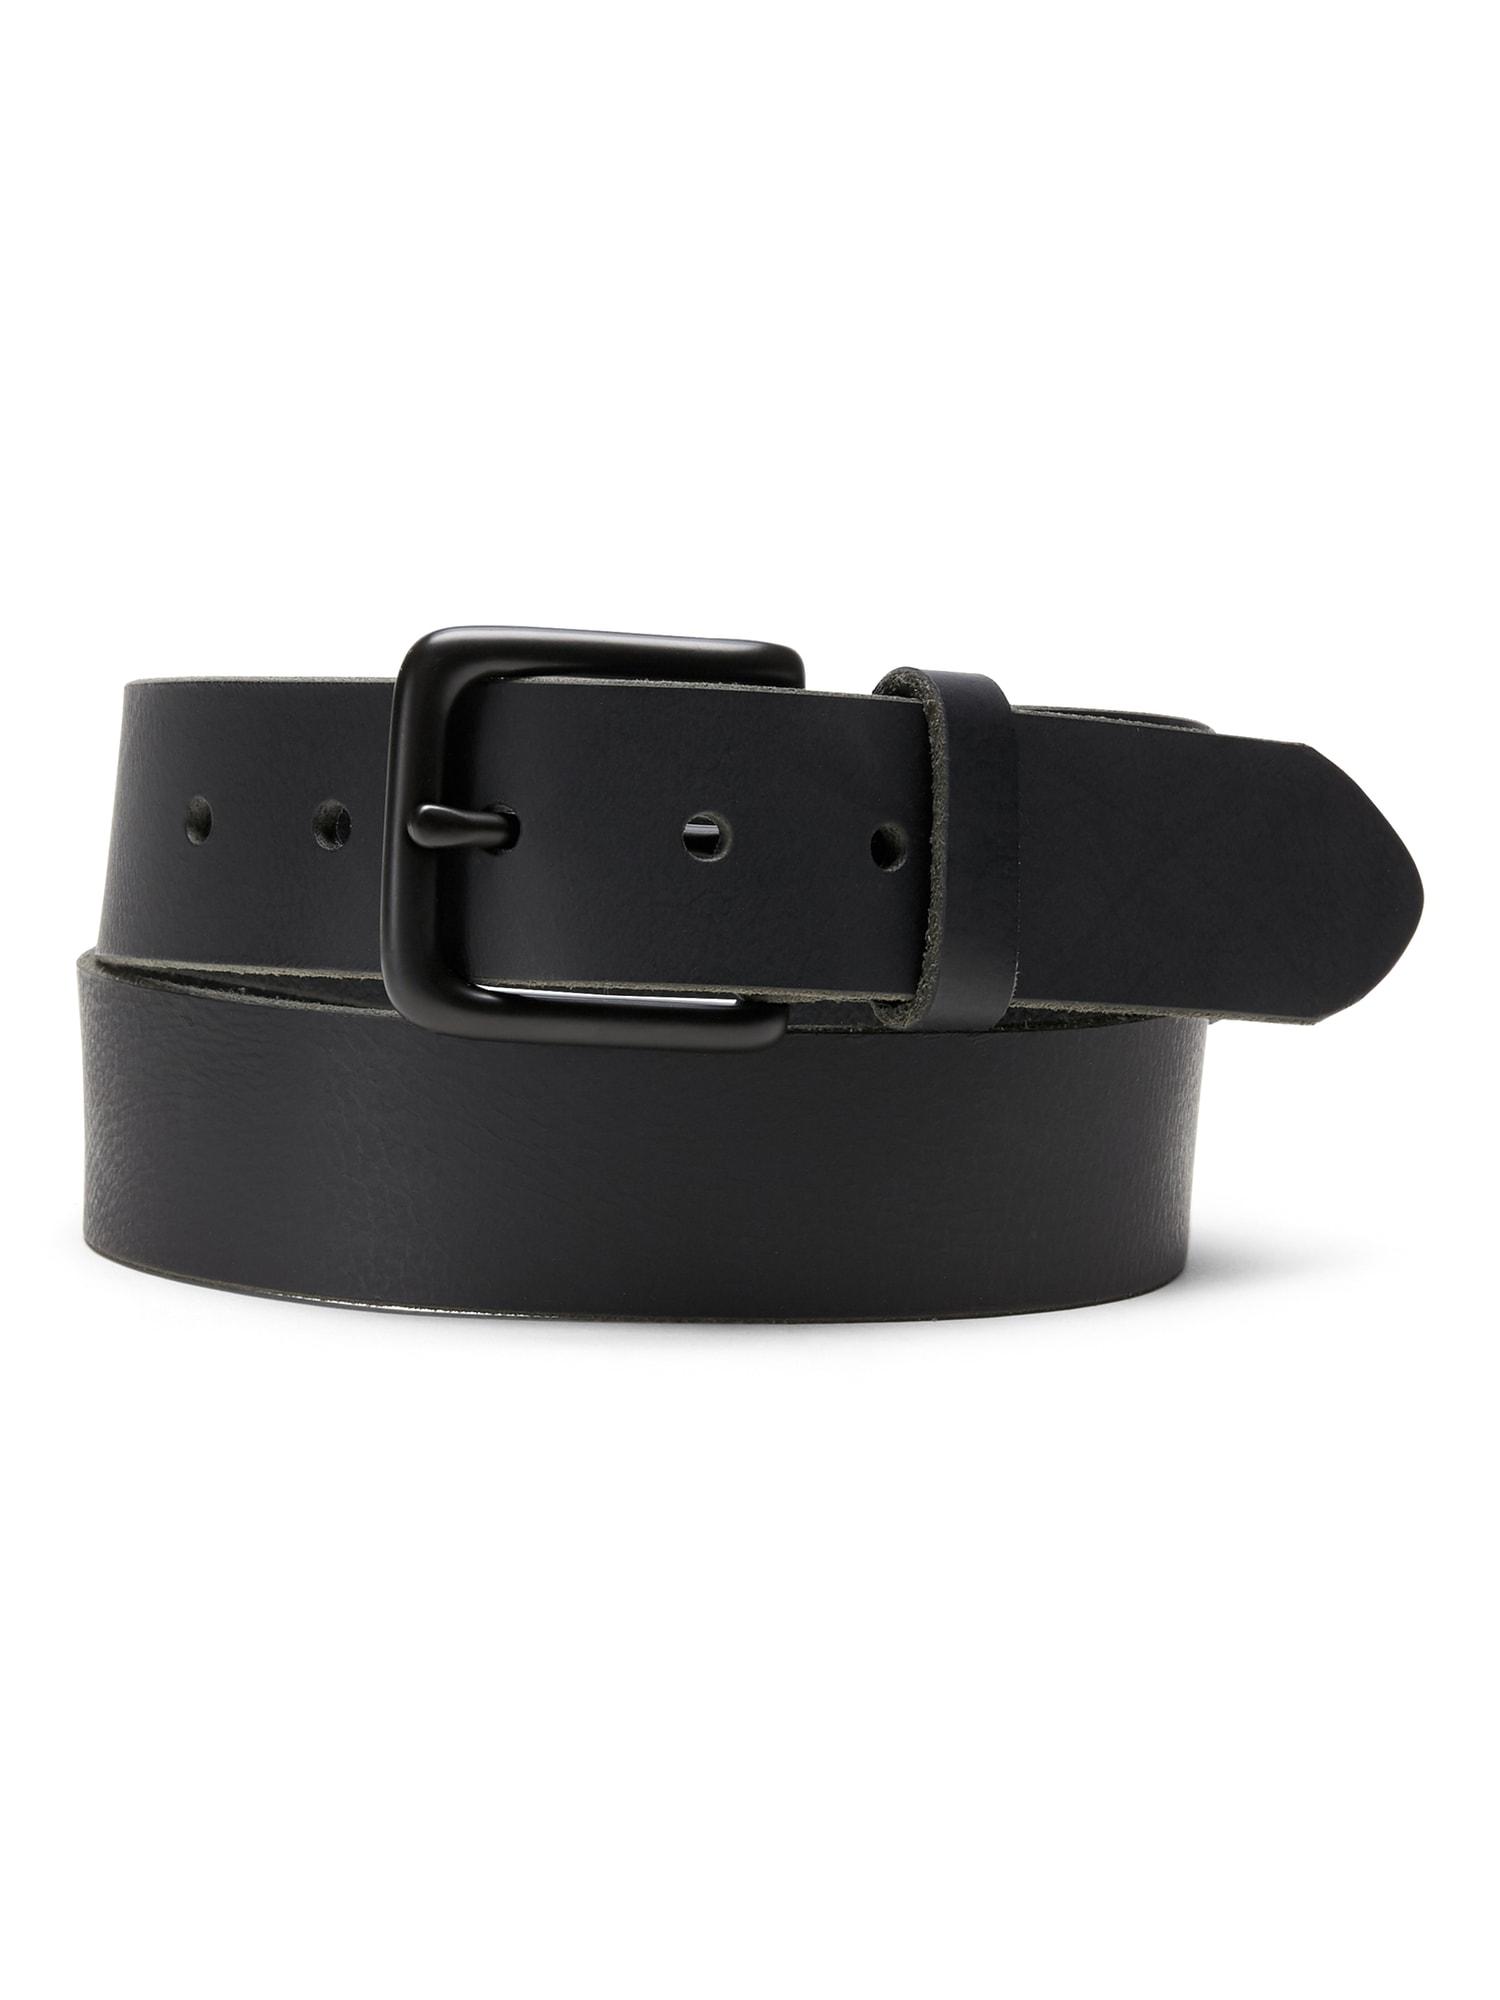 Banana Republic Enamel Buckle Leather Belt in Black for Men - Save 31% ...